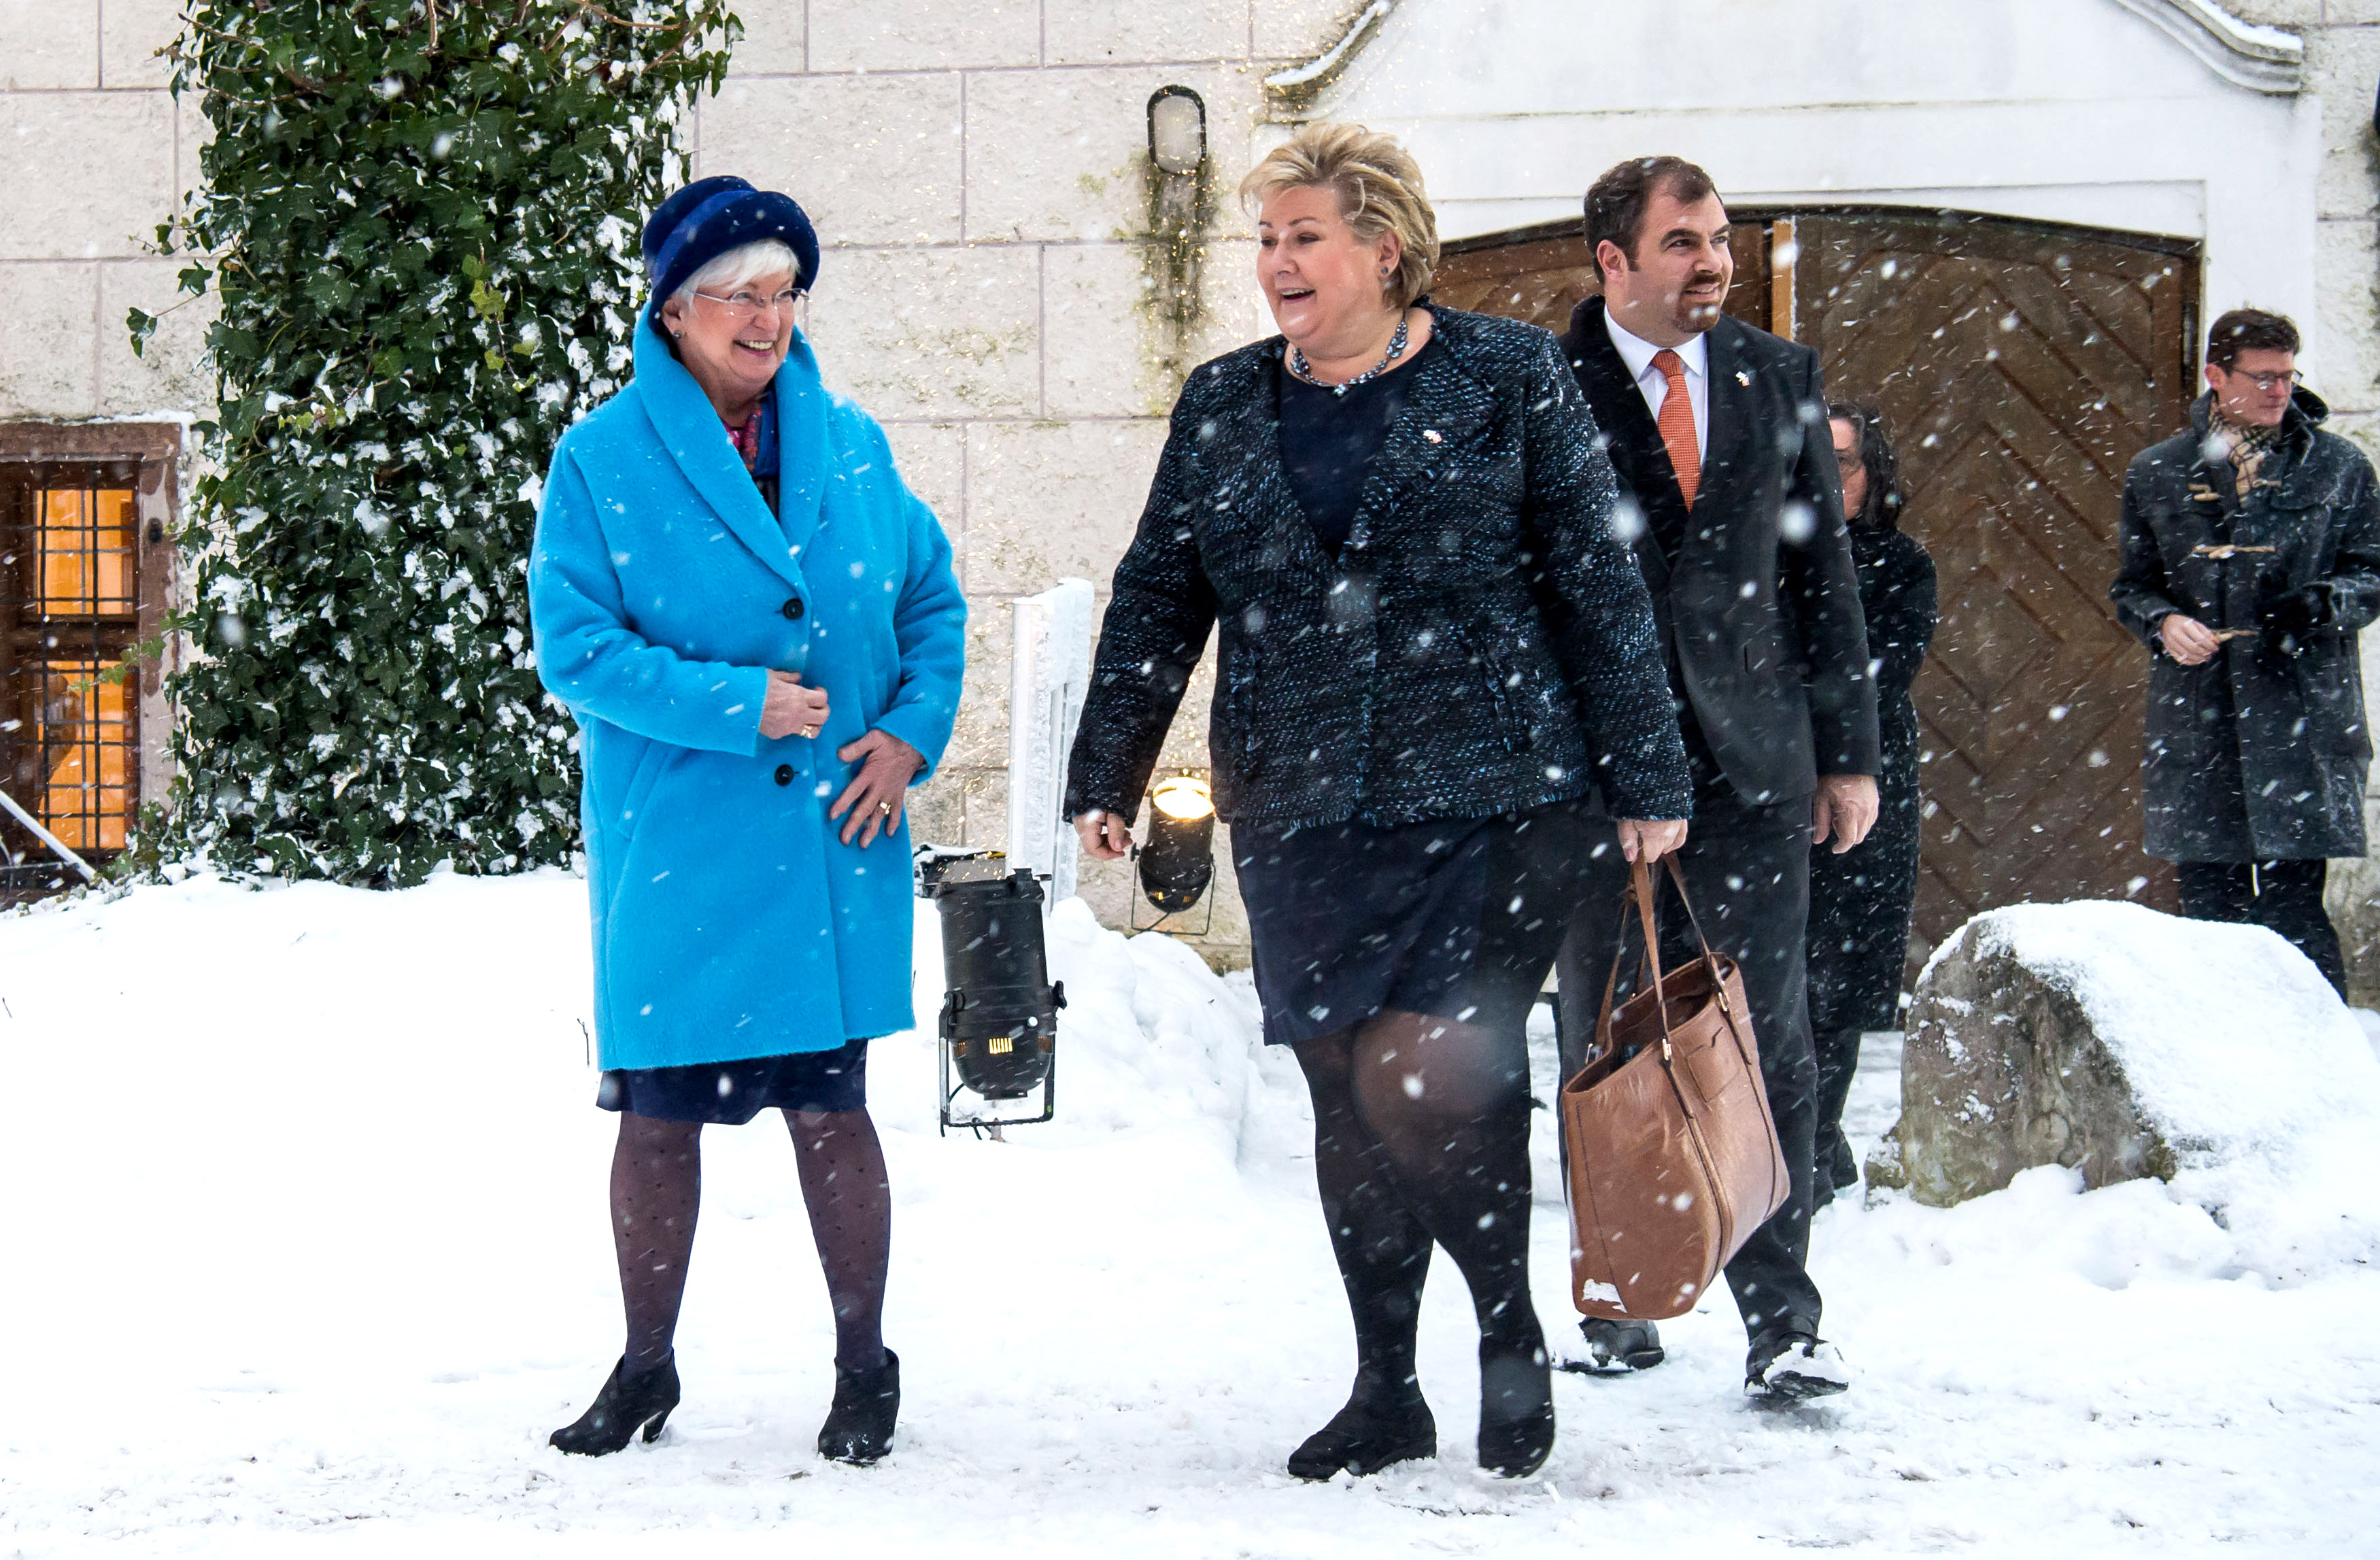 Gerda Hasselfeldt begrüßt Erna Solberg, Ministerpräsidentin von Norwegen